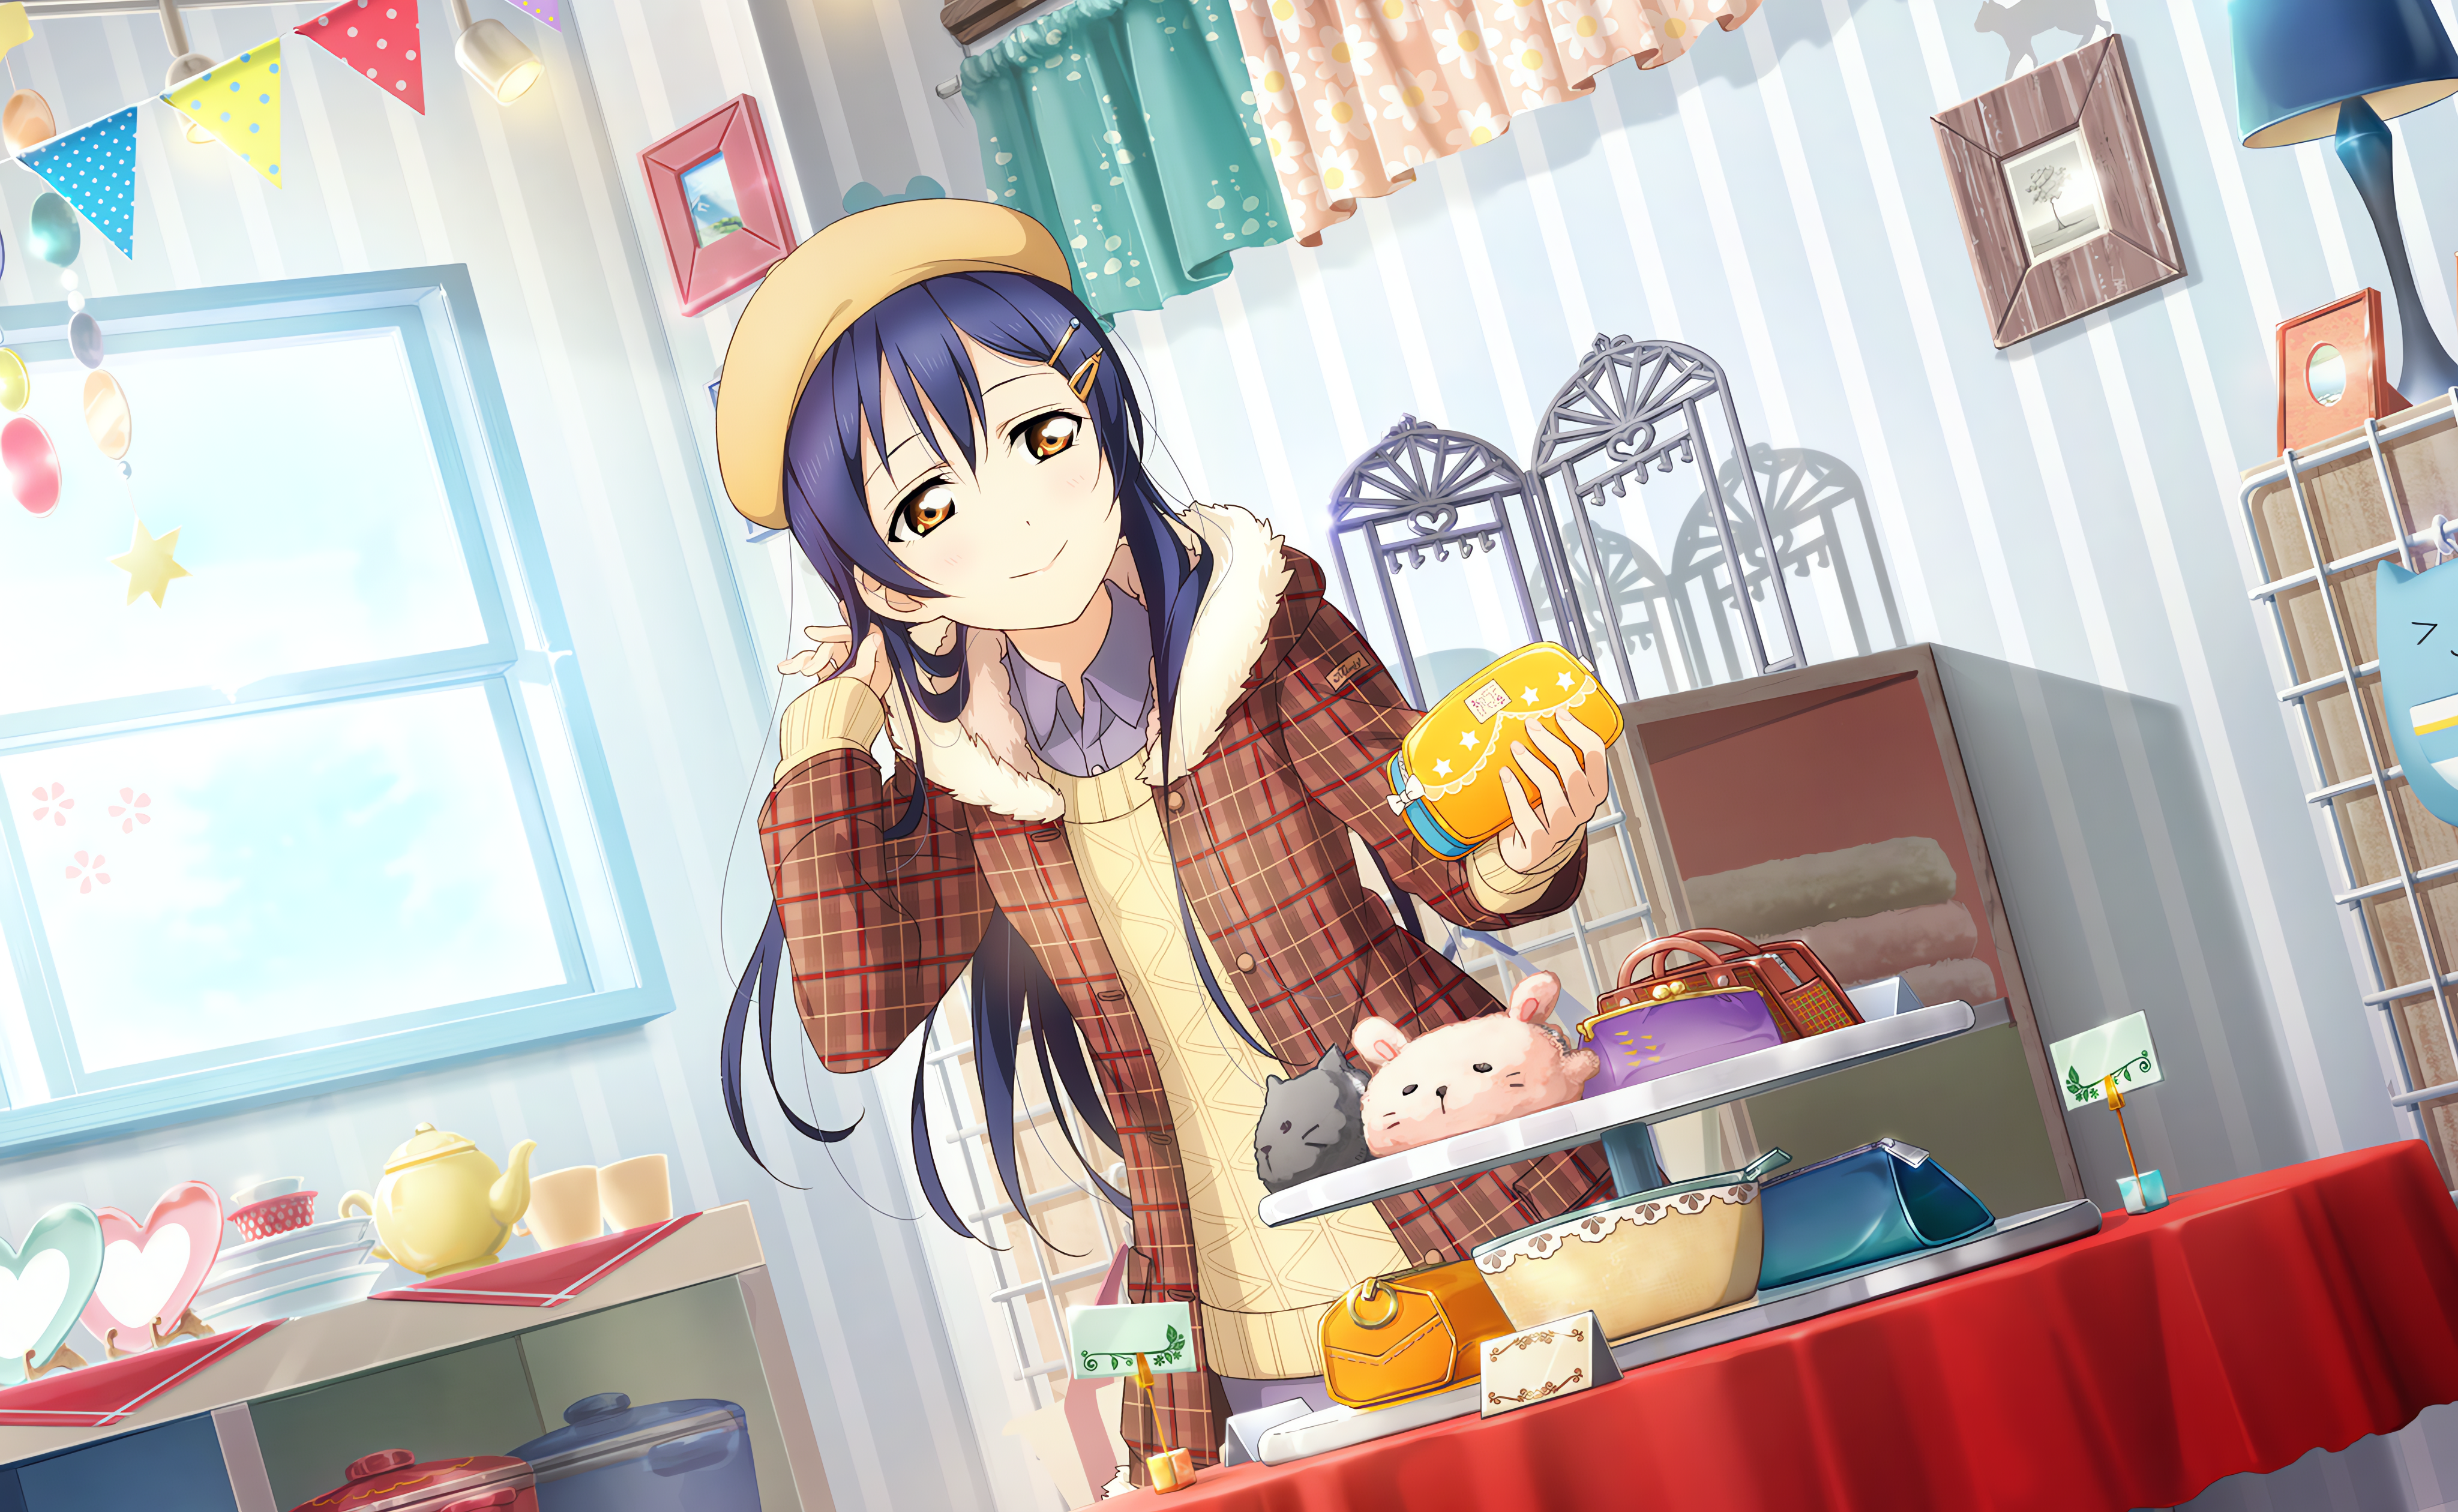 Sonoda Umi Love Live Anime Anime Girls Smiling Long Hair Purse Cup Tea Pot Jacket Standing Shopping  4096x2520